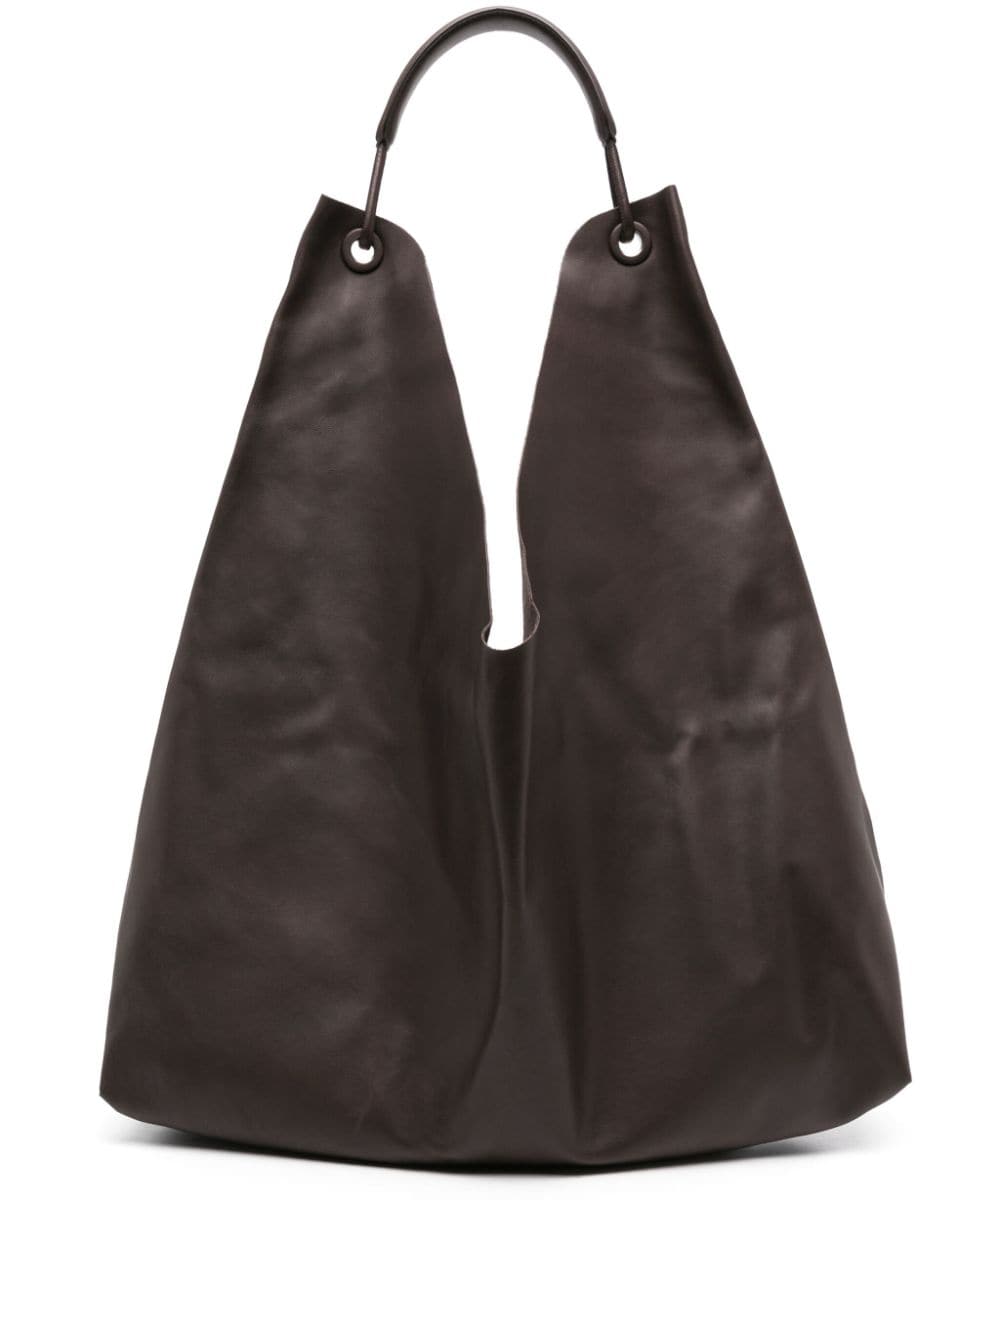 Bindle 3 leather tote bag